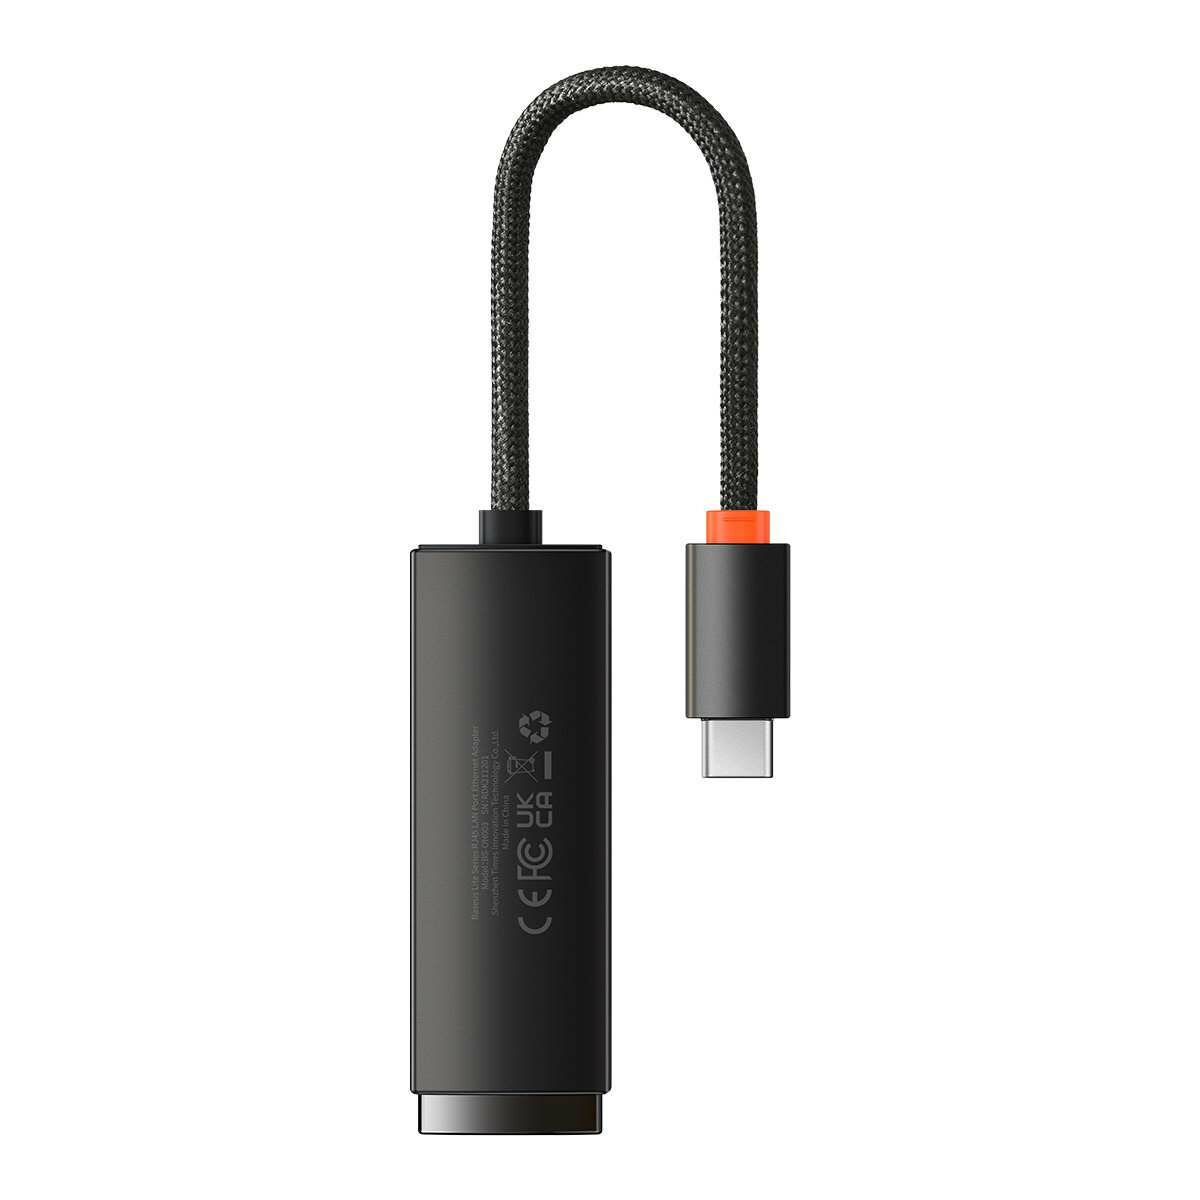 Kép 4/18 - Baseus hálózati adapter, Lite Series, USB Type-C - RJ-45, 1Gbps-ig, fekete (WKQX000301)